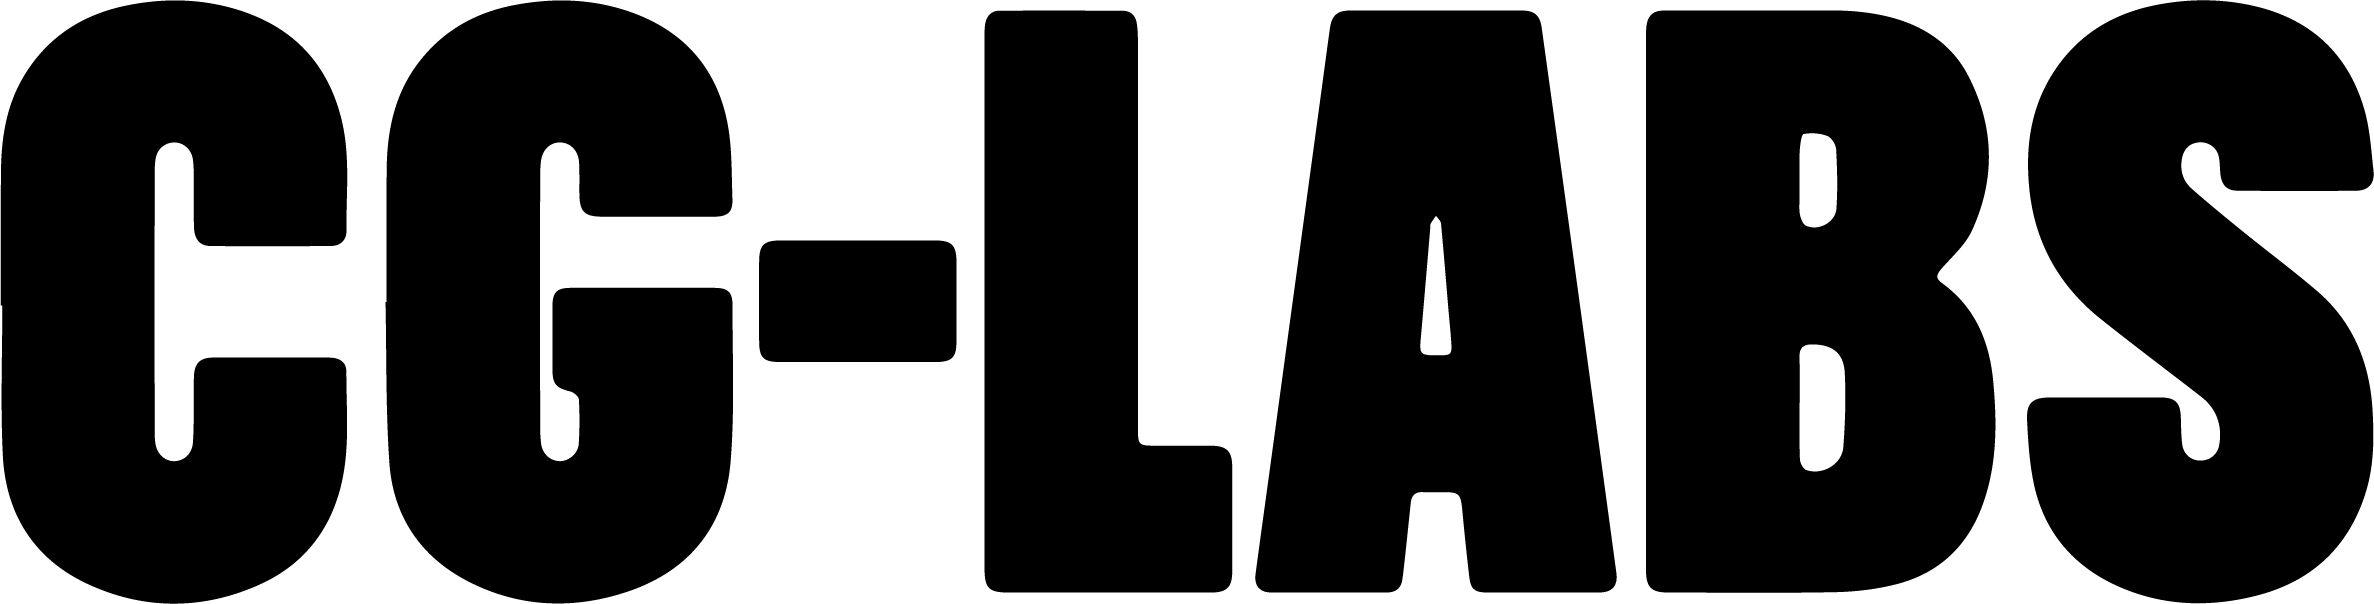 CG-Labs Logo